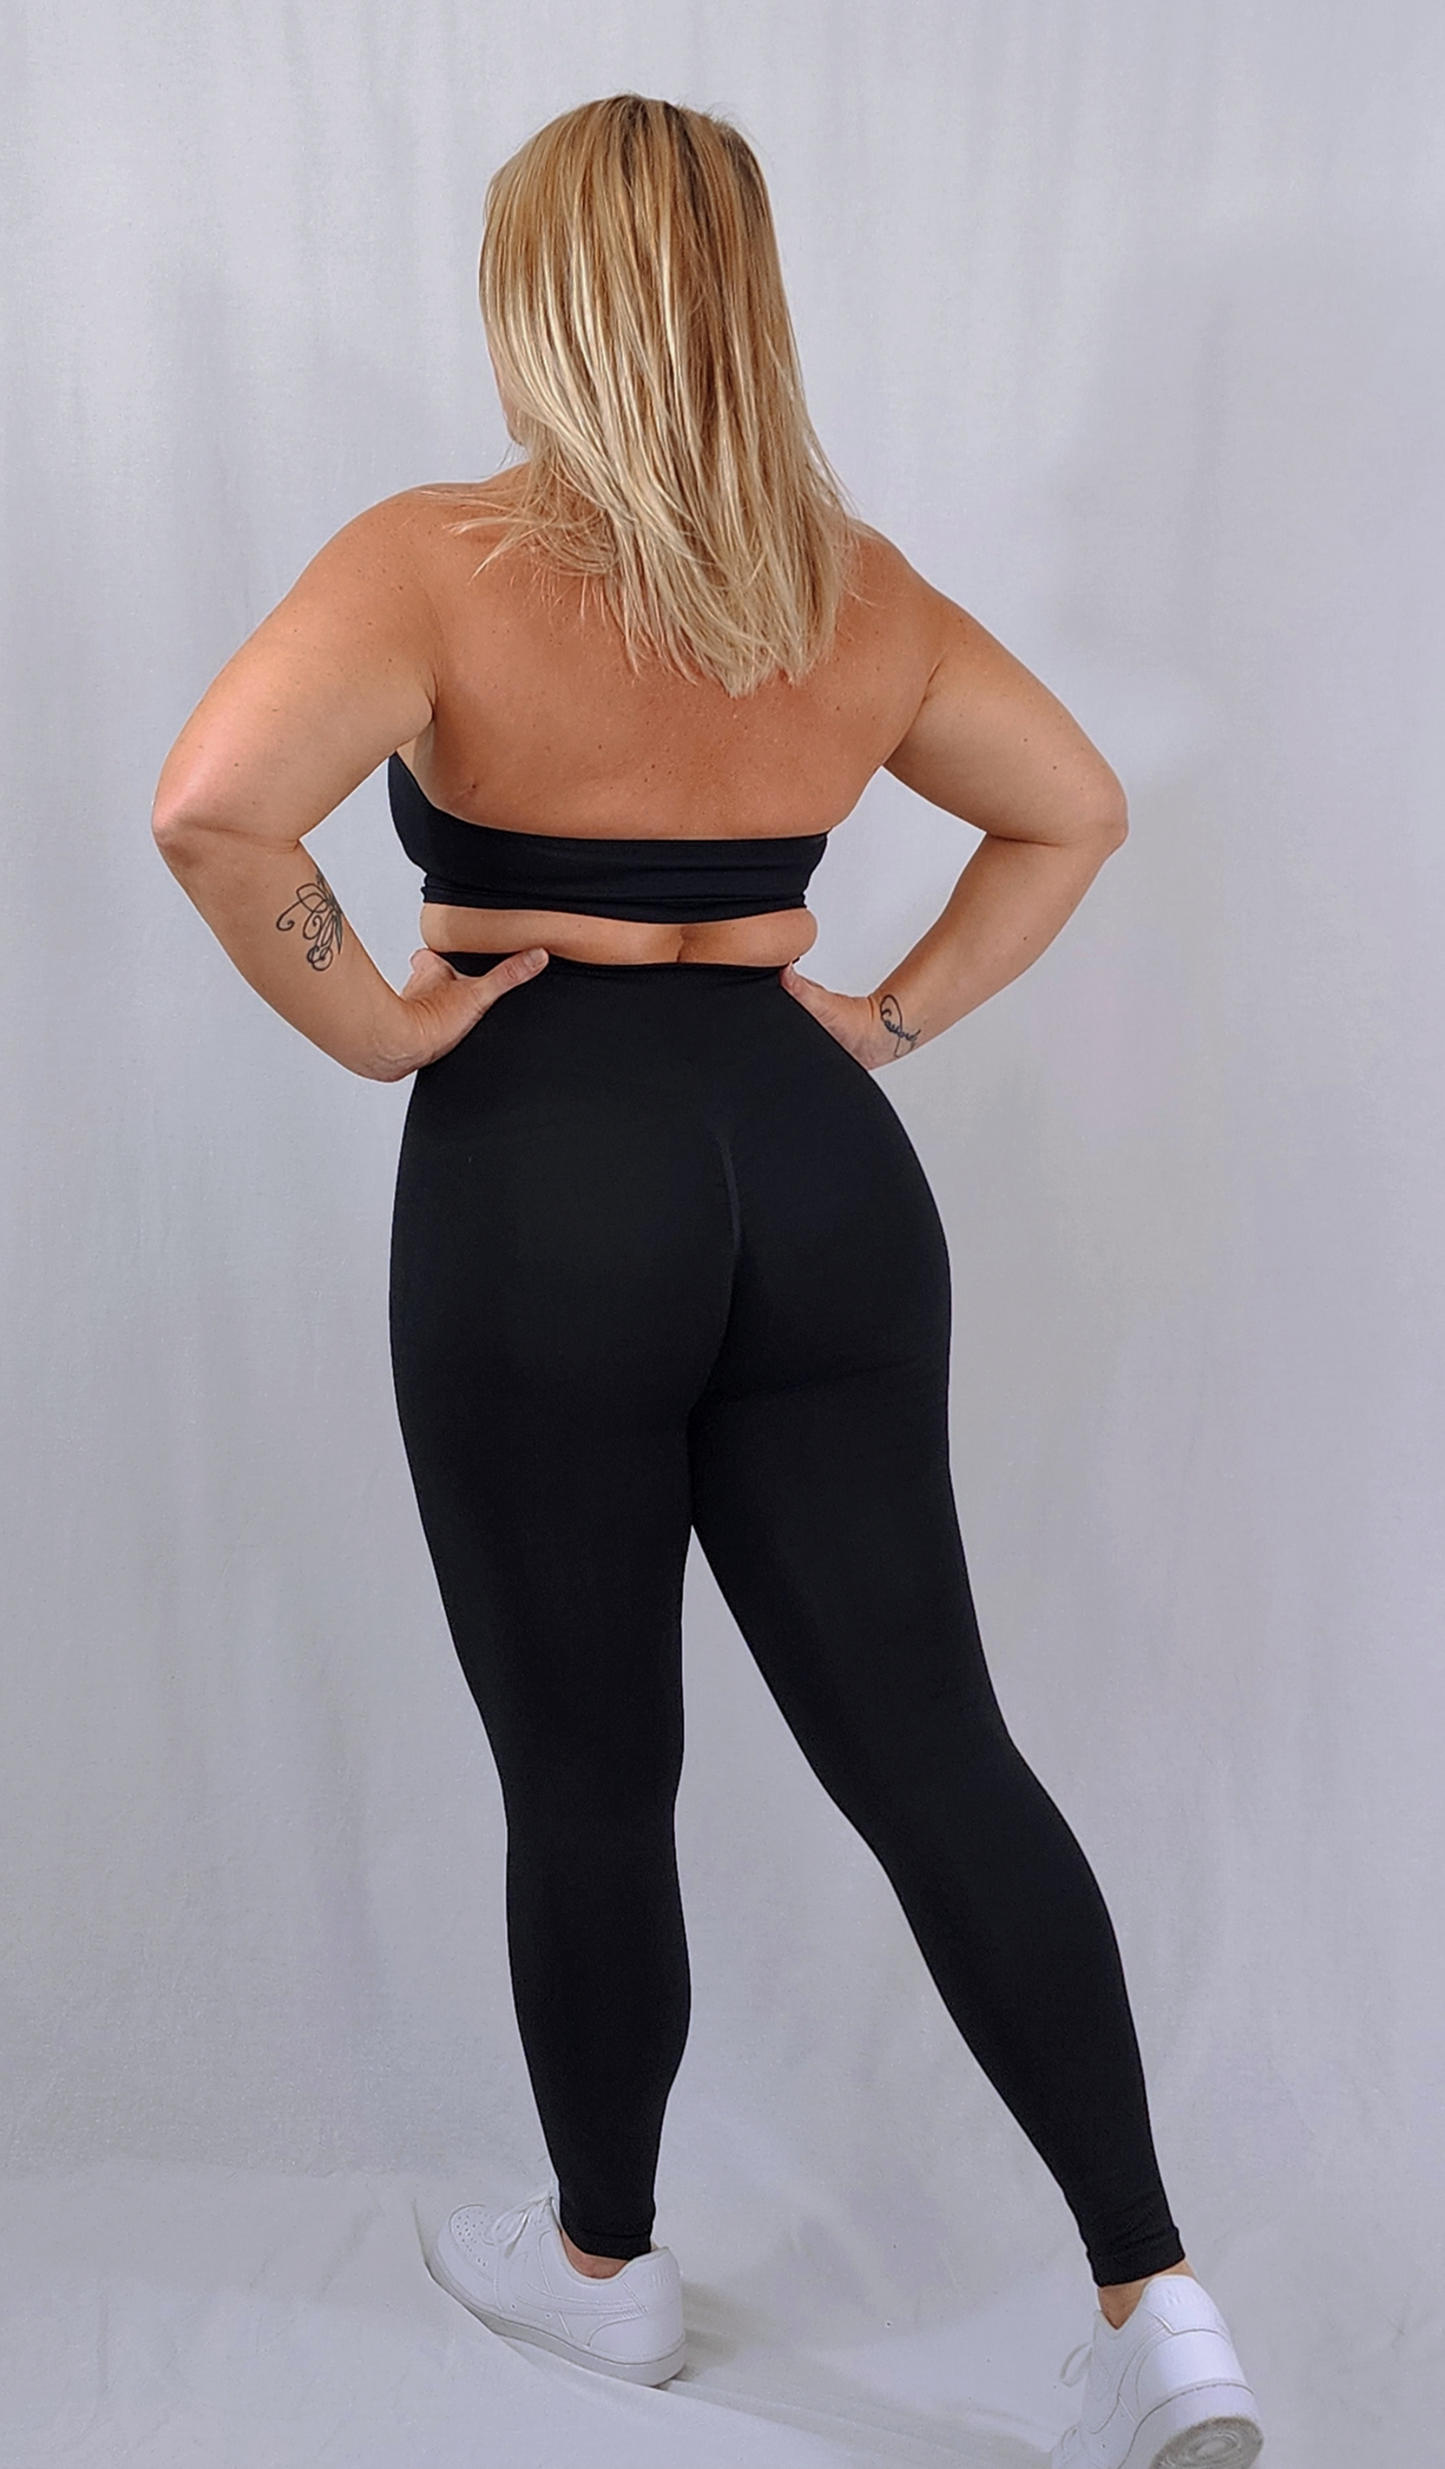 Gym Brand Apparel black leggings and black halter sports bra back view.